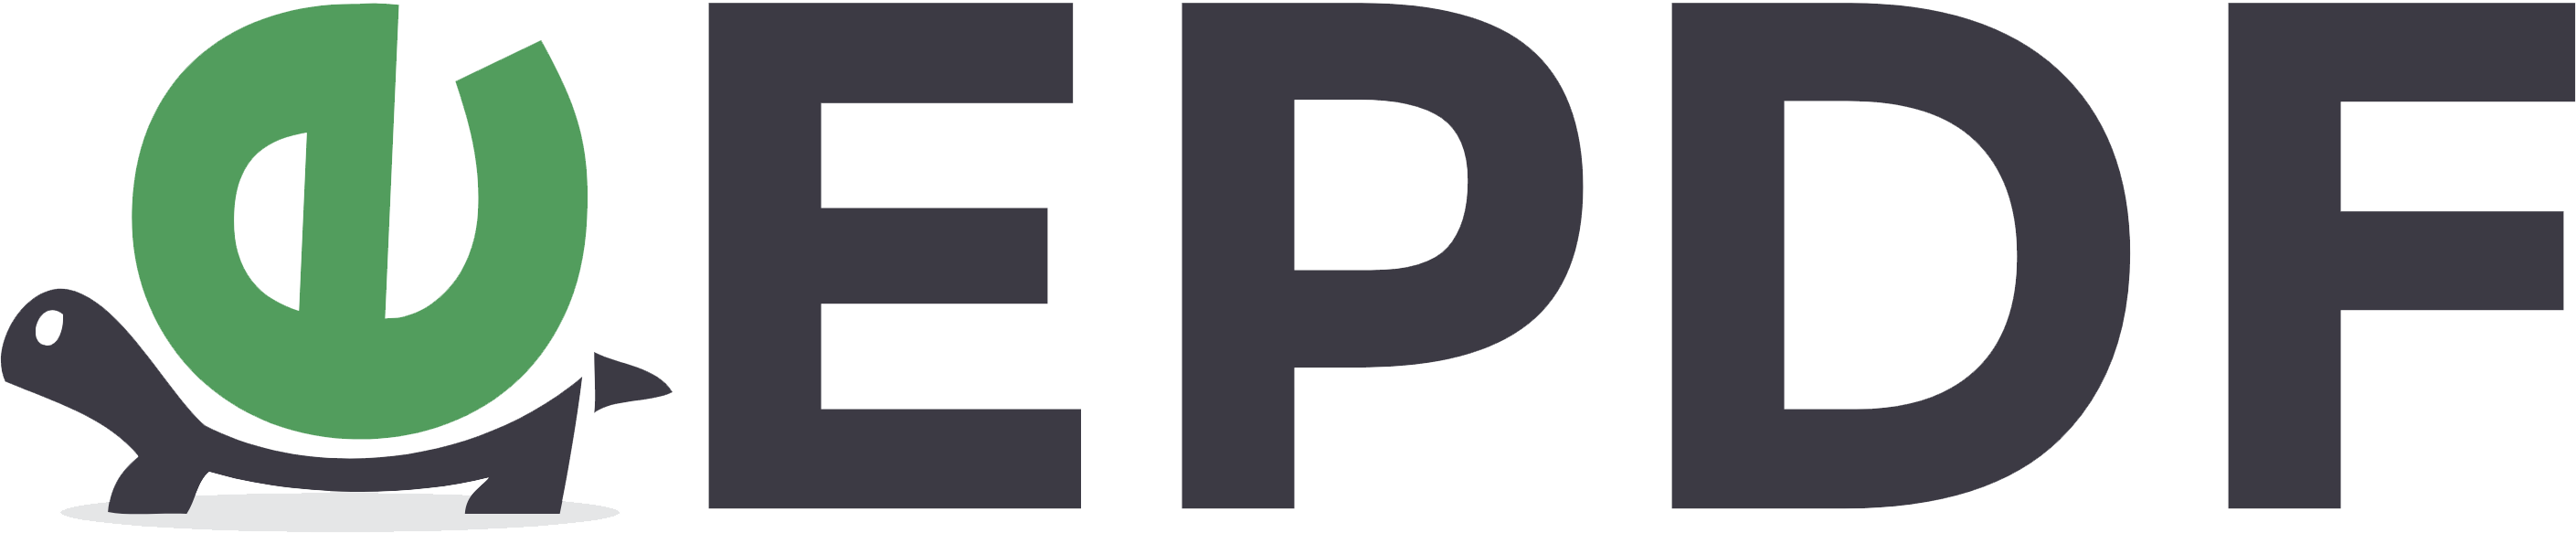 epdf logo